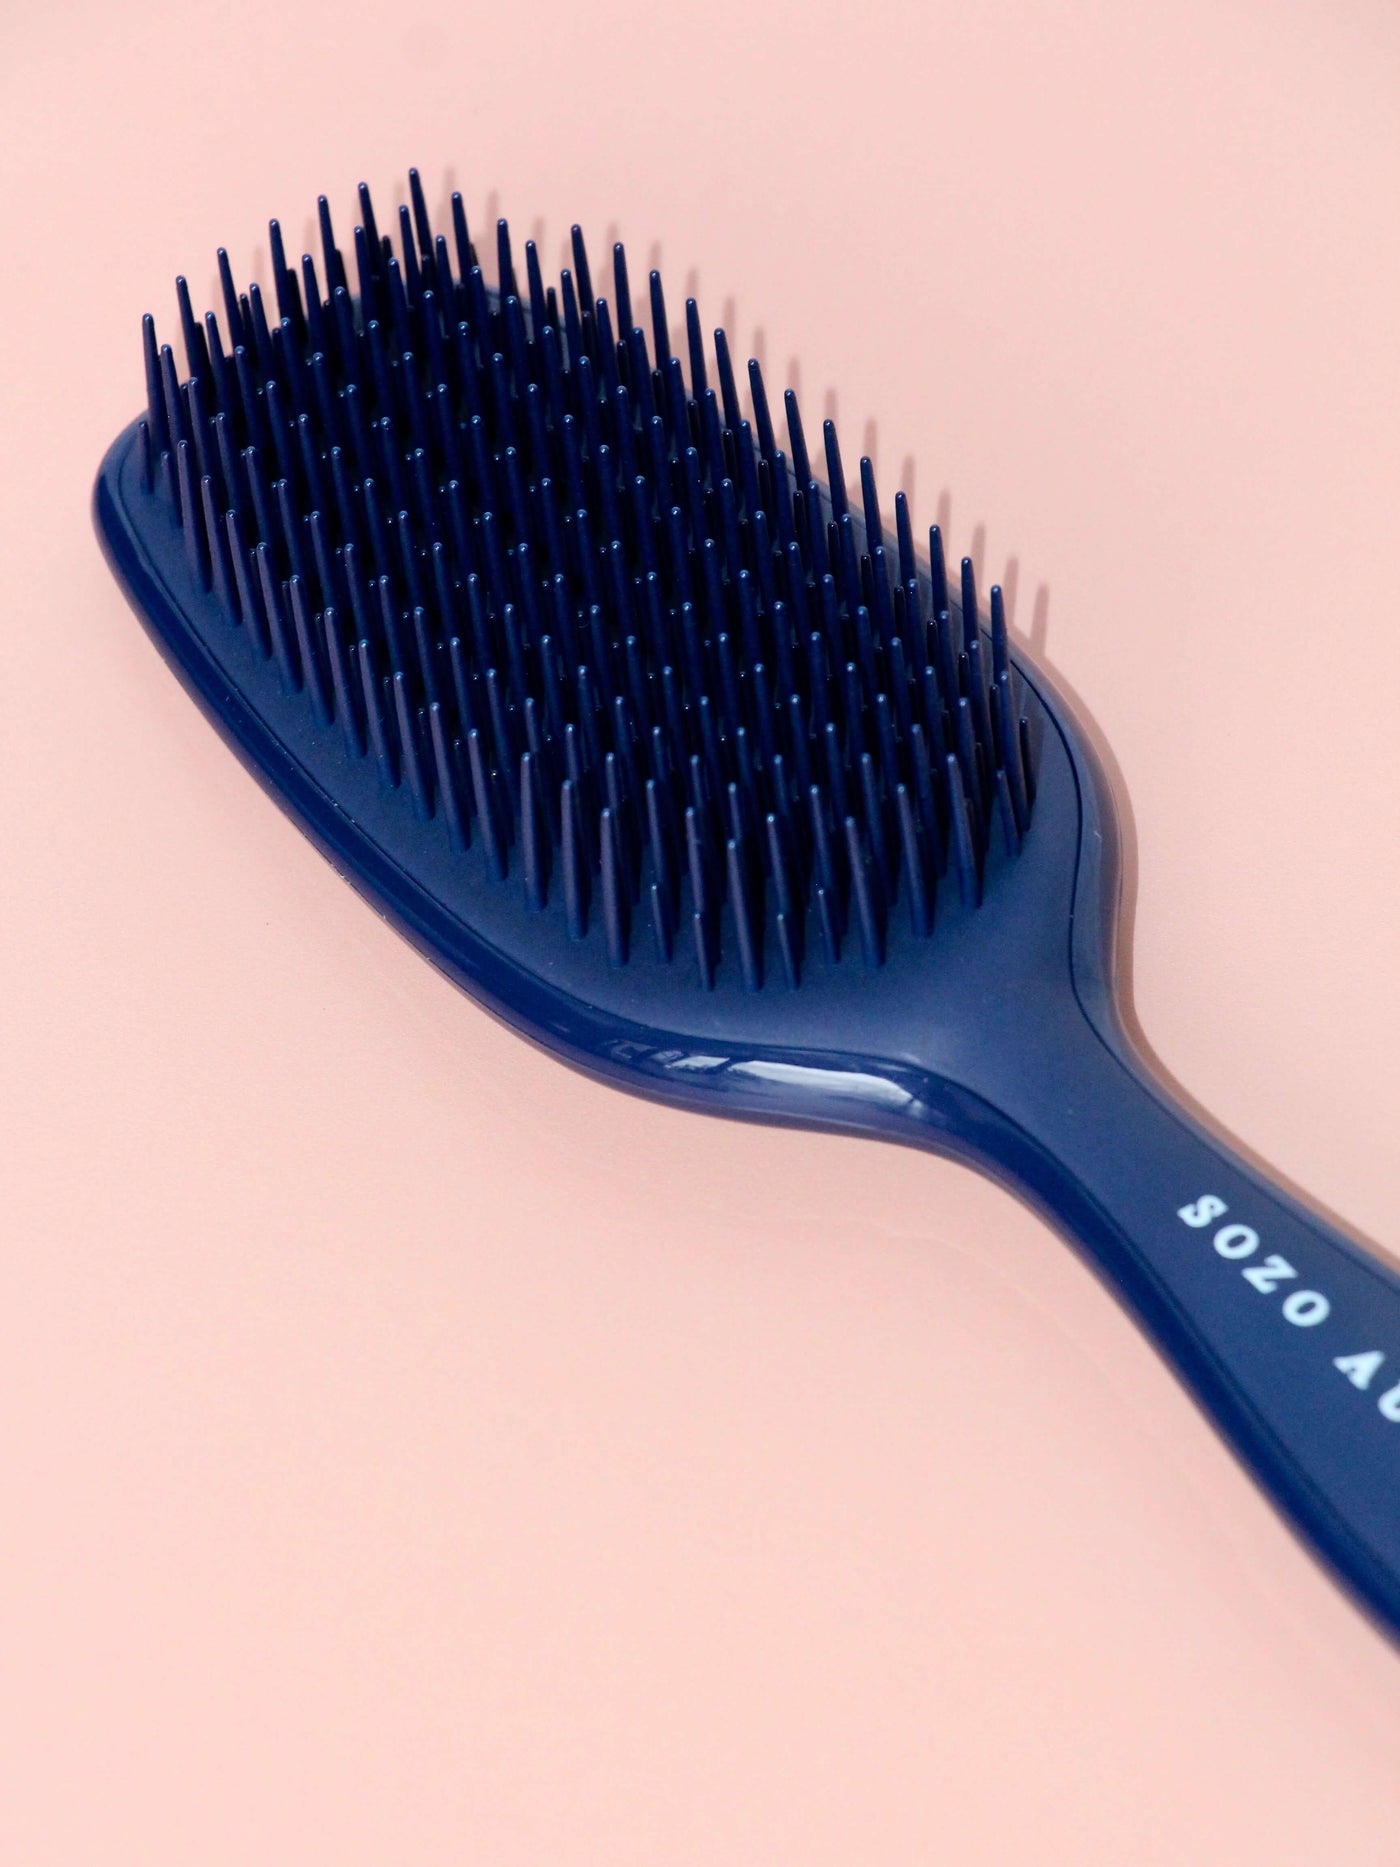 Close up of bristles on the Sozo detangling hairbrush